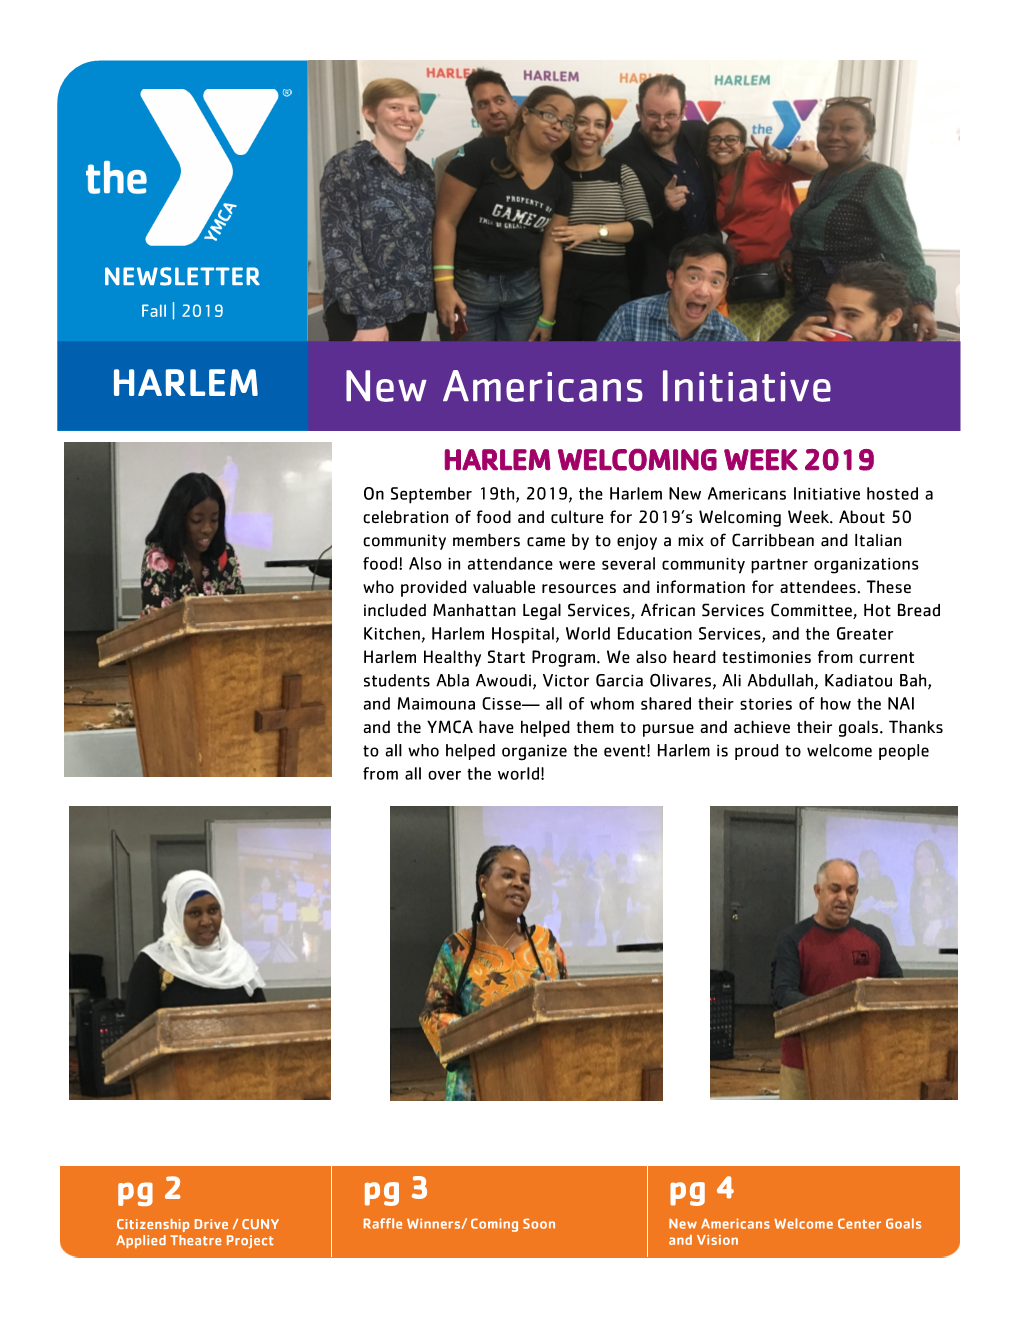 HARLEM New Americans Initiative